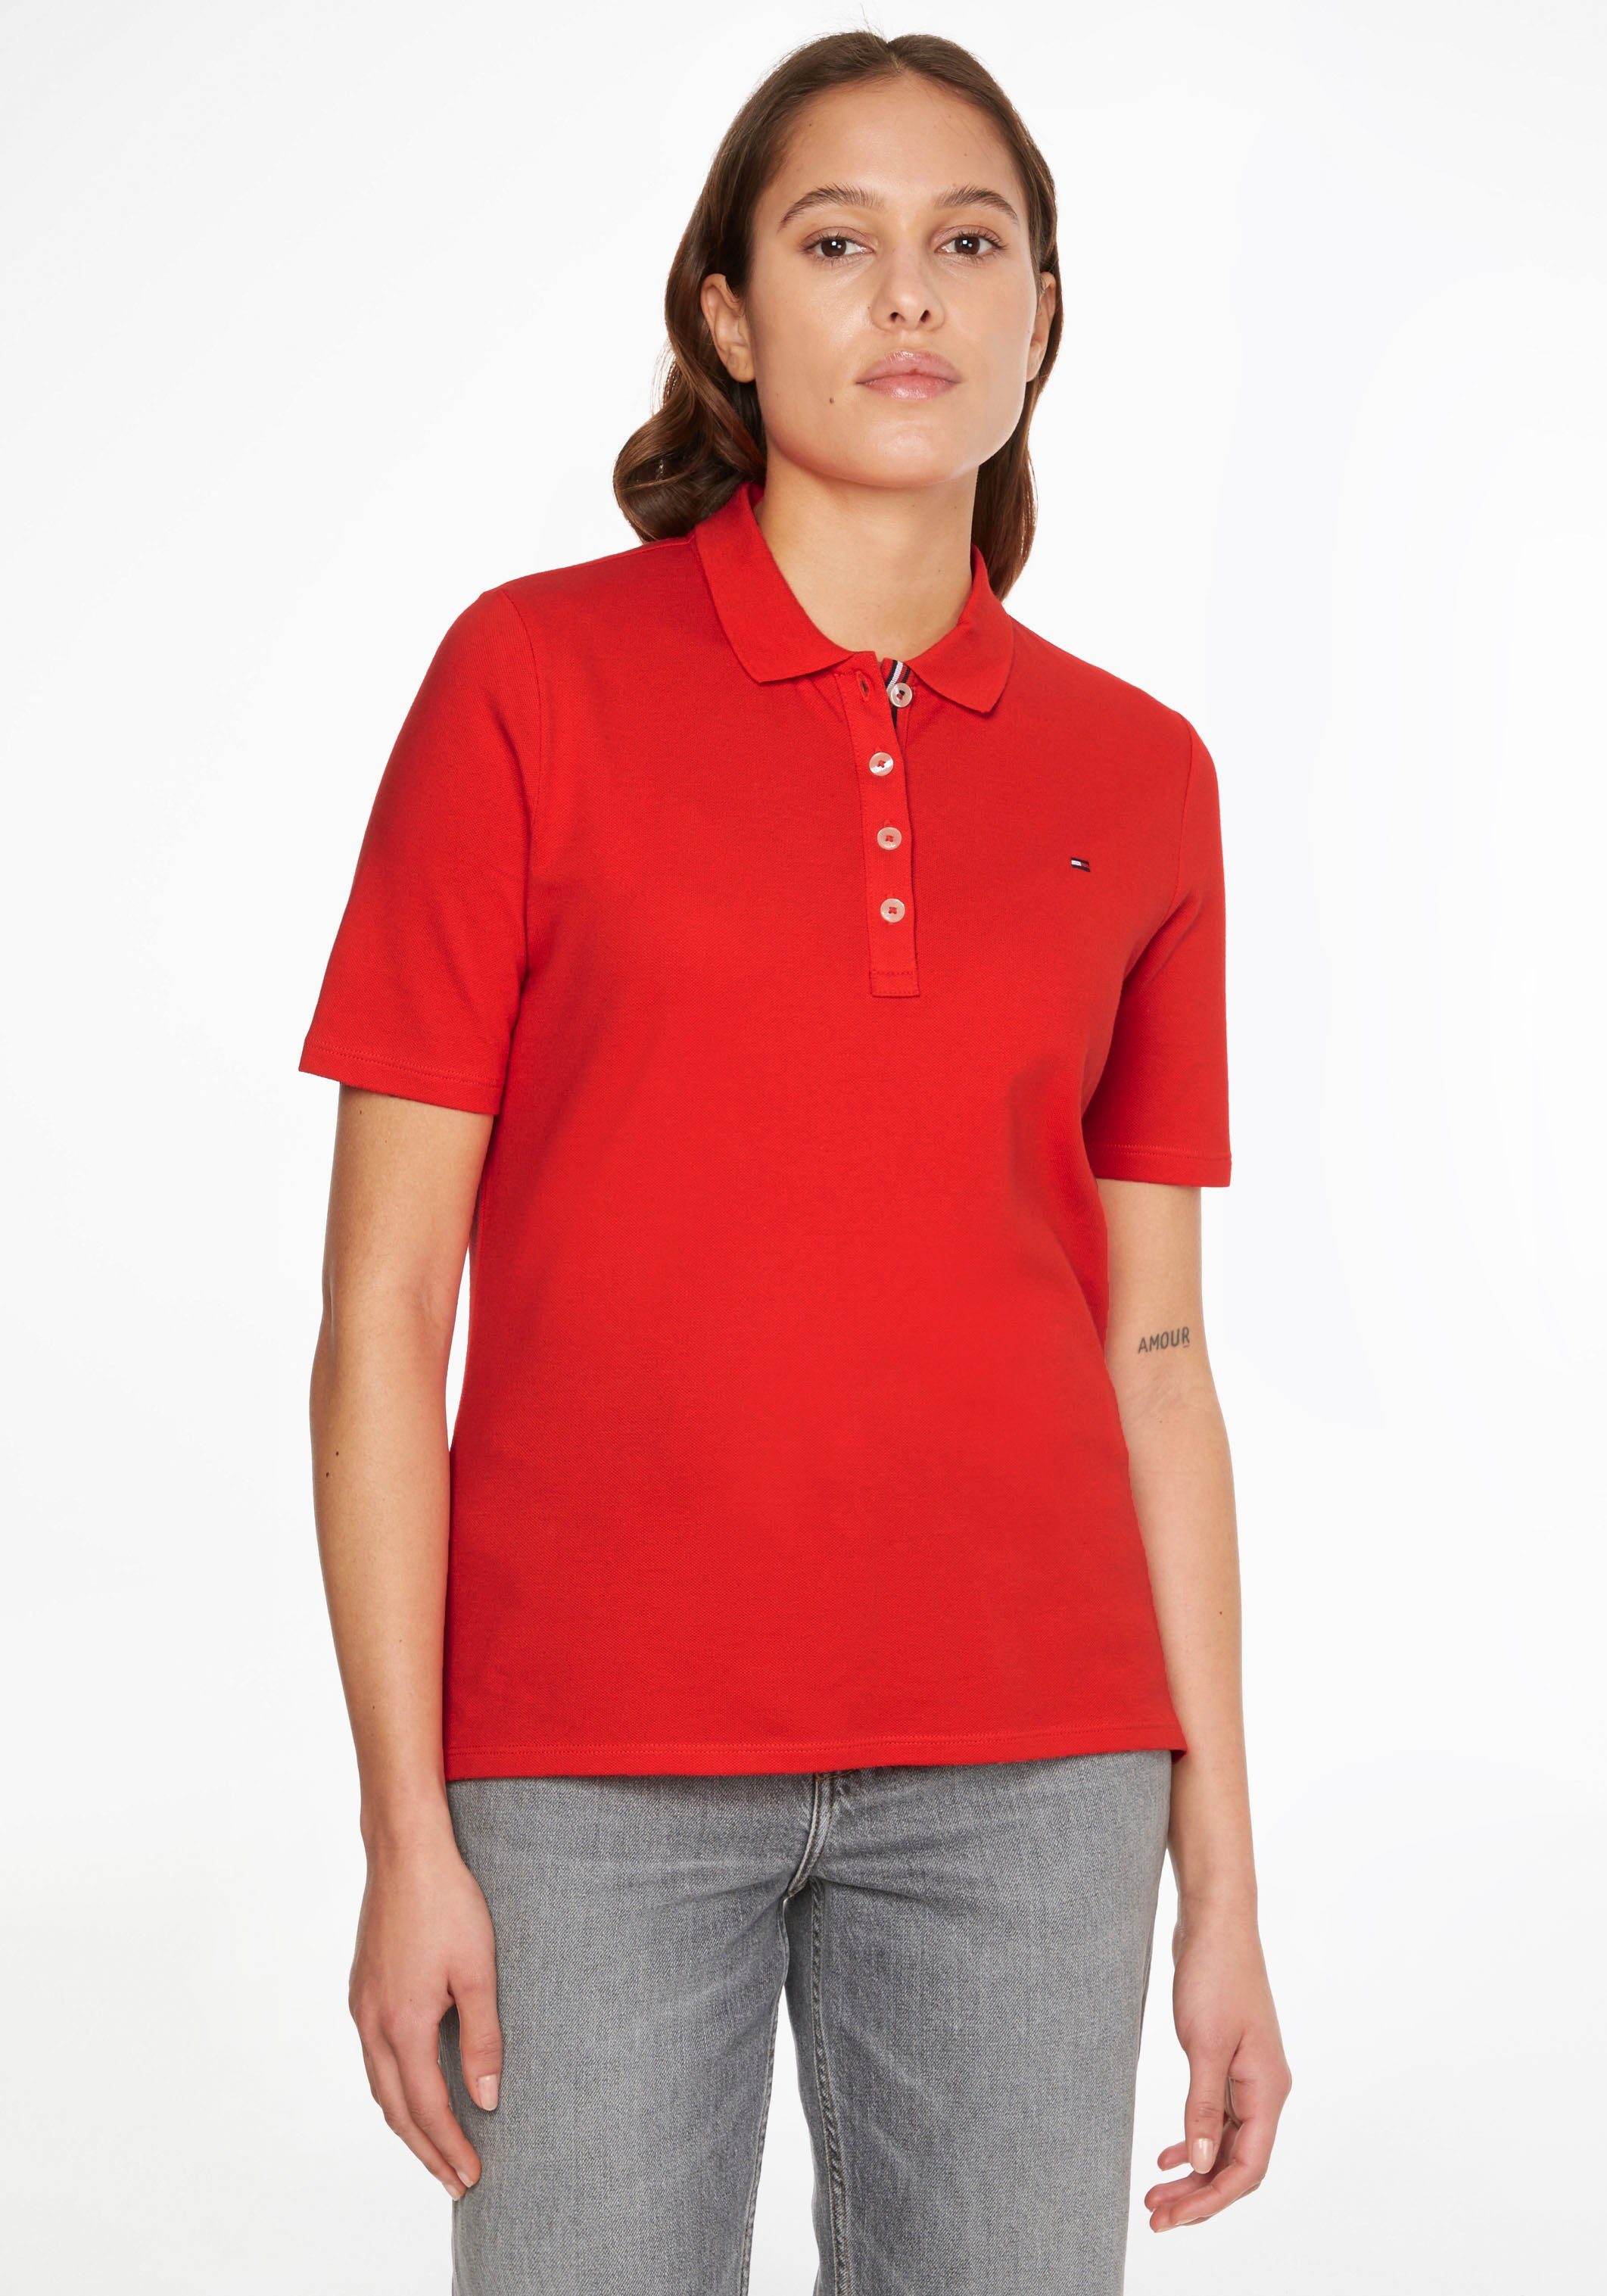 Rote Damen Poloshirts online kaufen » Rote Polohemden | OTTO